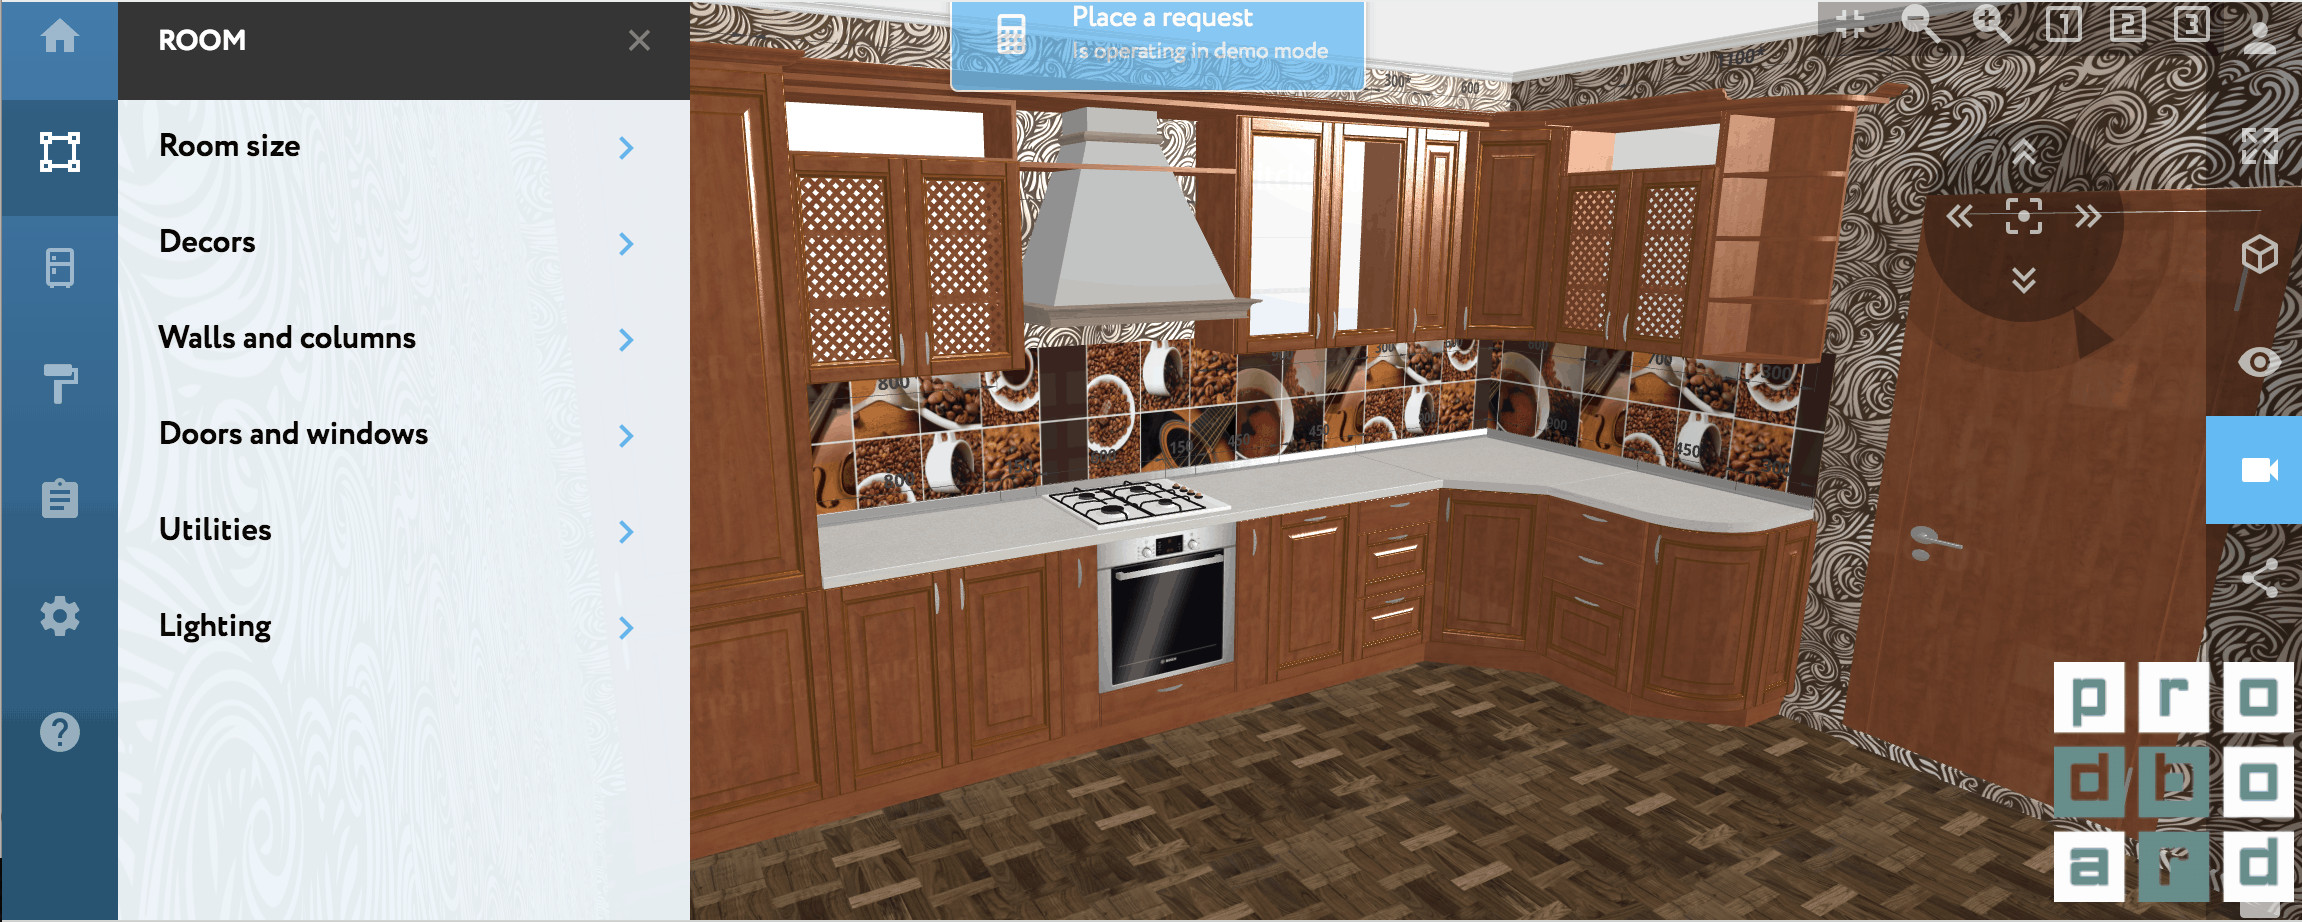 44 HQ Photos Kitchen Design App / Make Smart Choices When Customizing